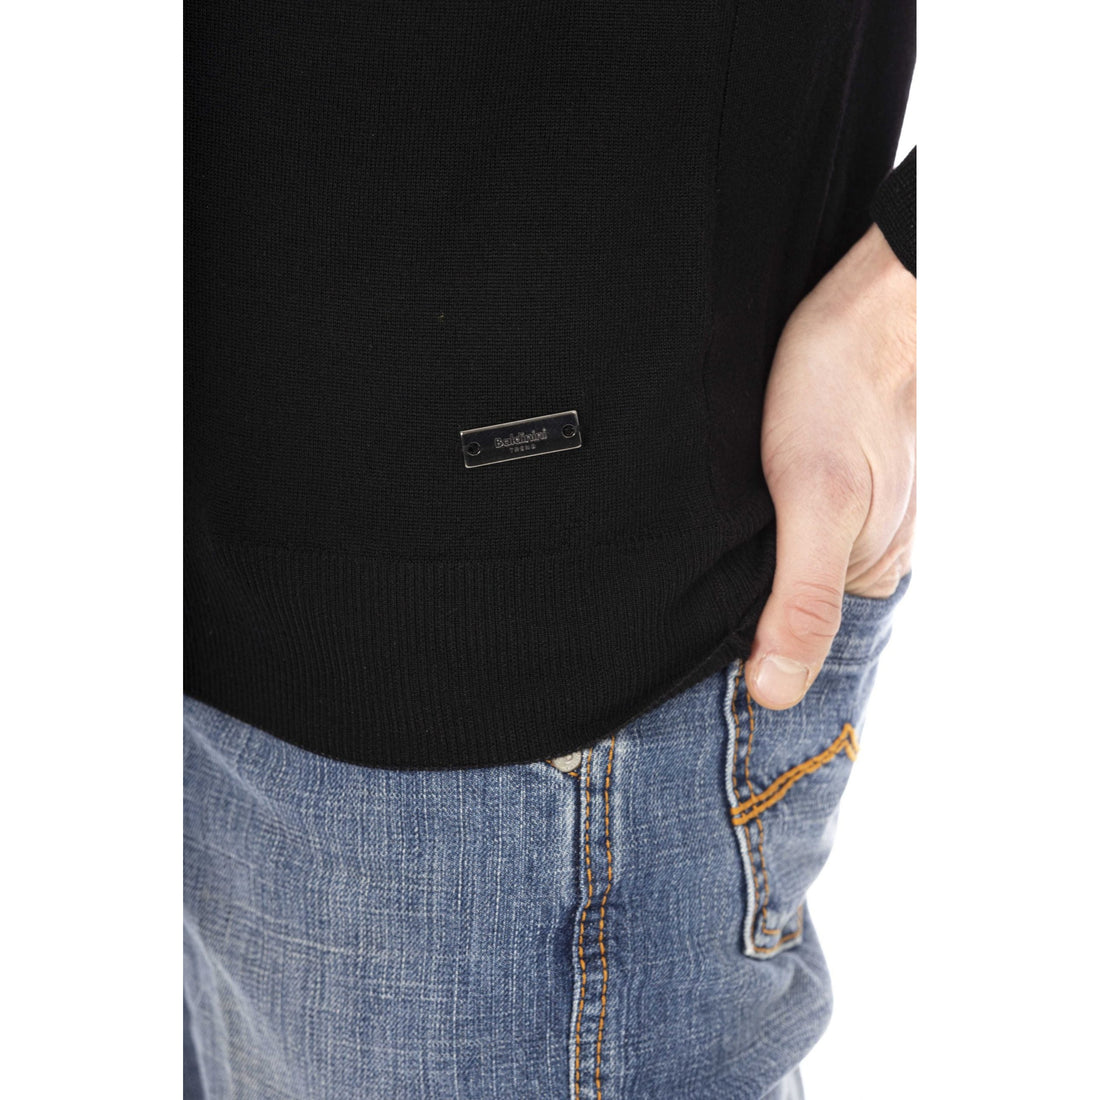 Baldinini Trend Elegant Turtleneck Sweater with Monogram Accent